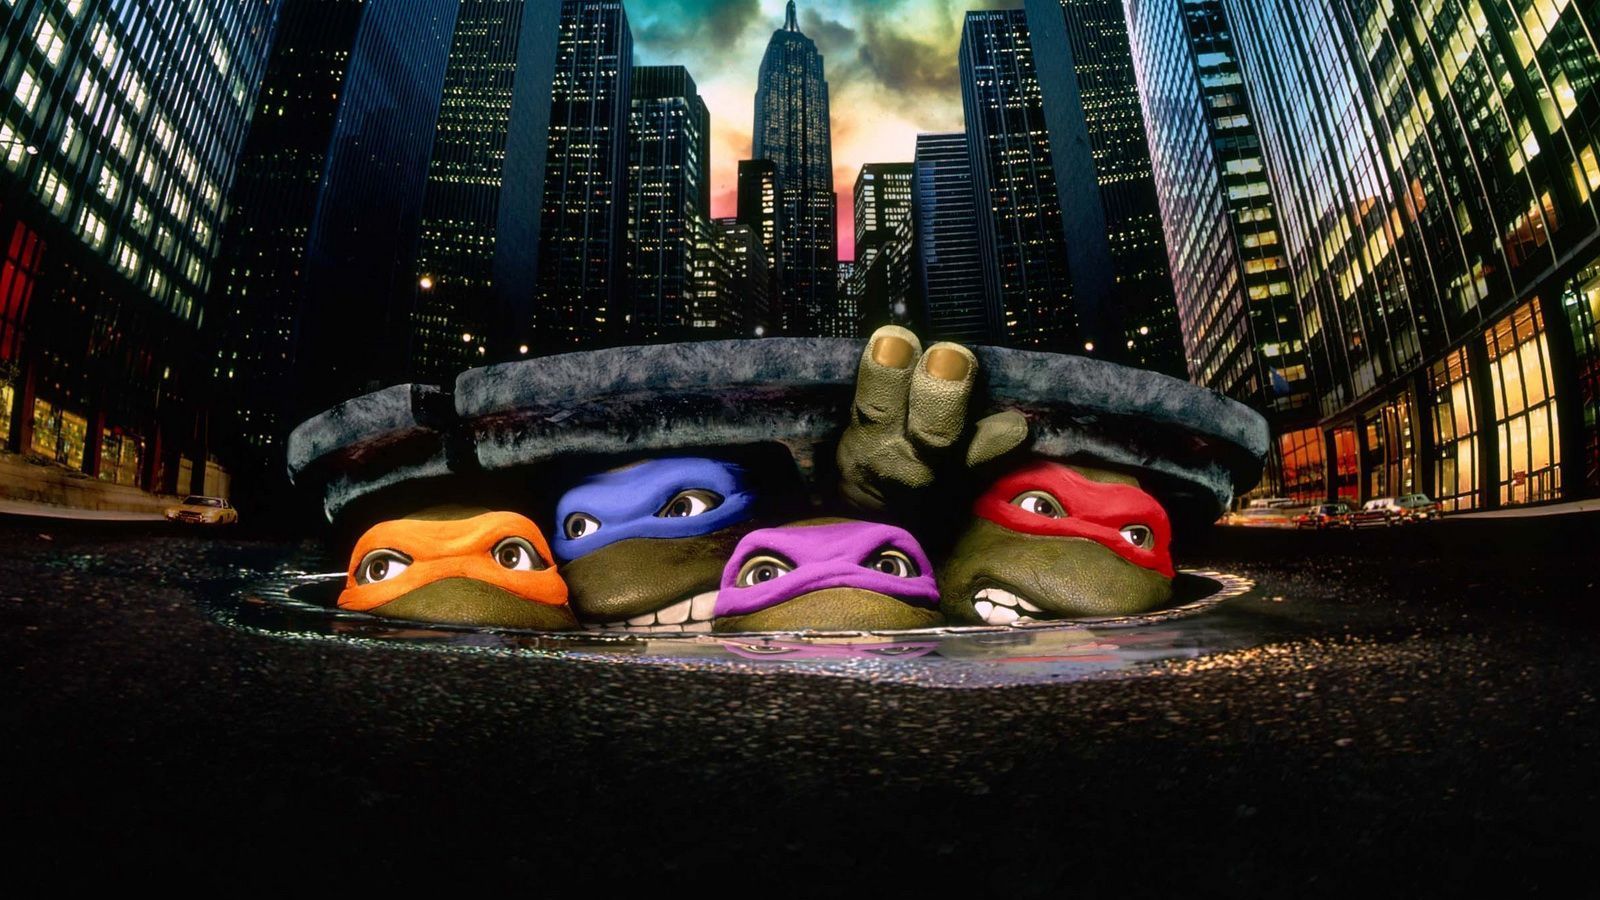 The Big City - Teenage Mutant Ninja Turtles Wallpaper (39058359 ...